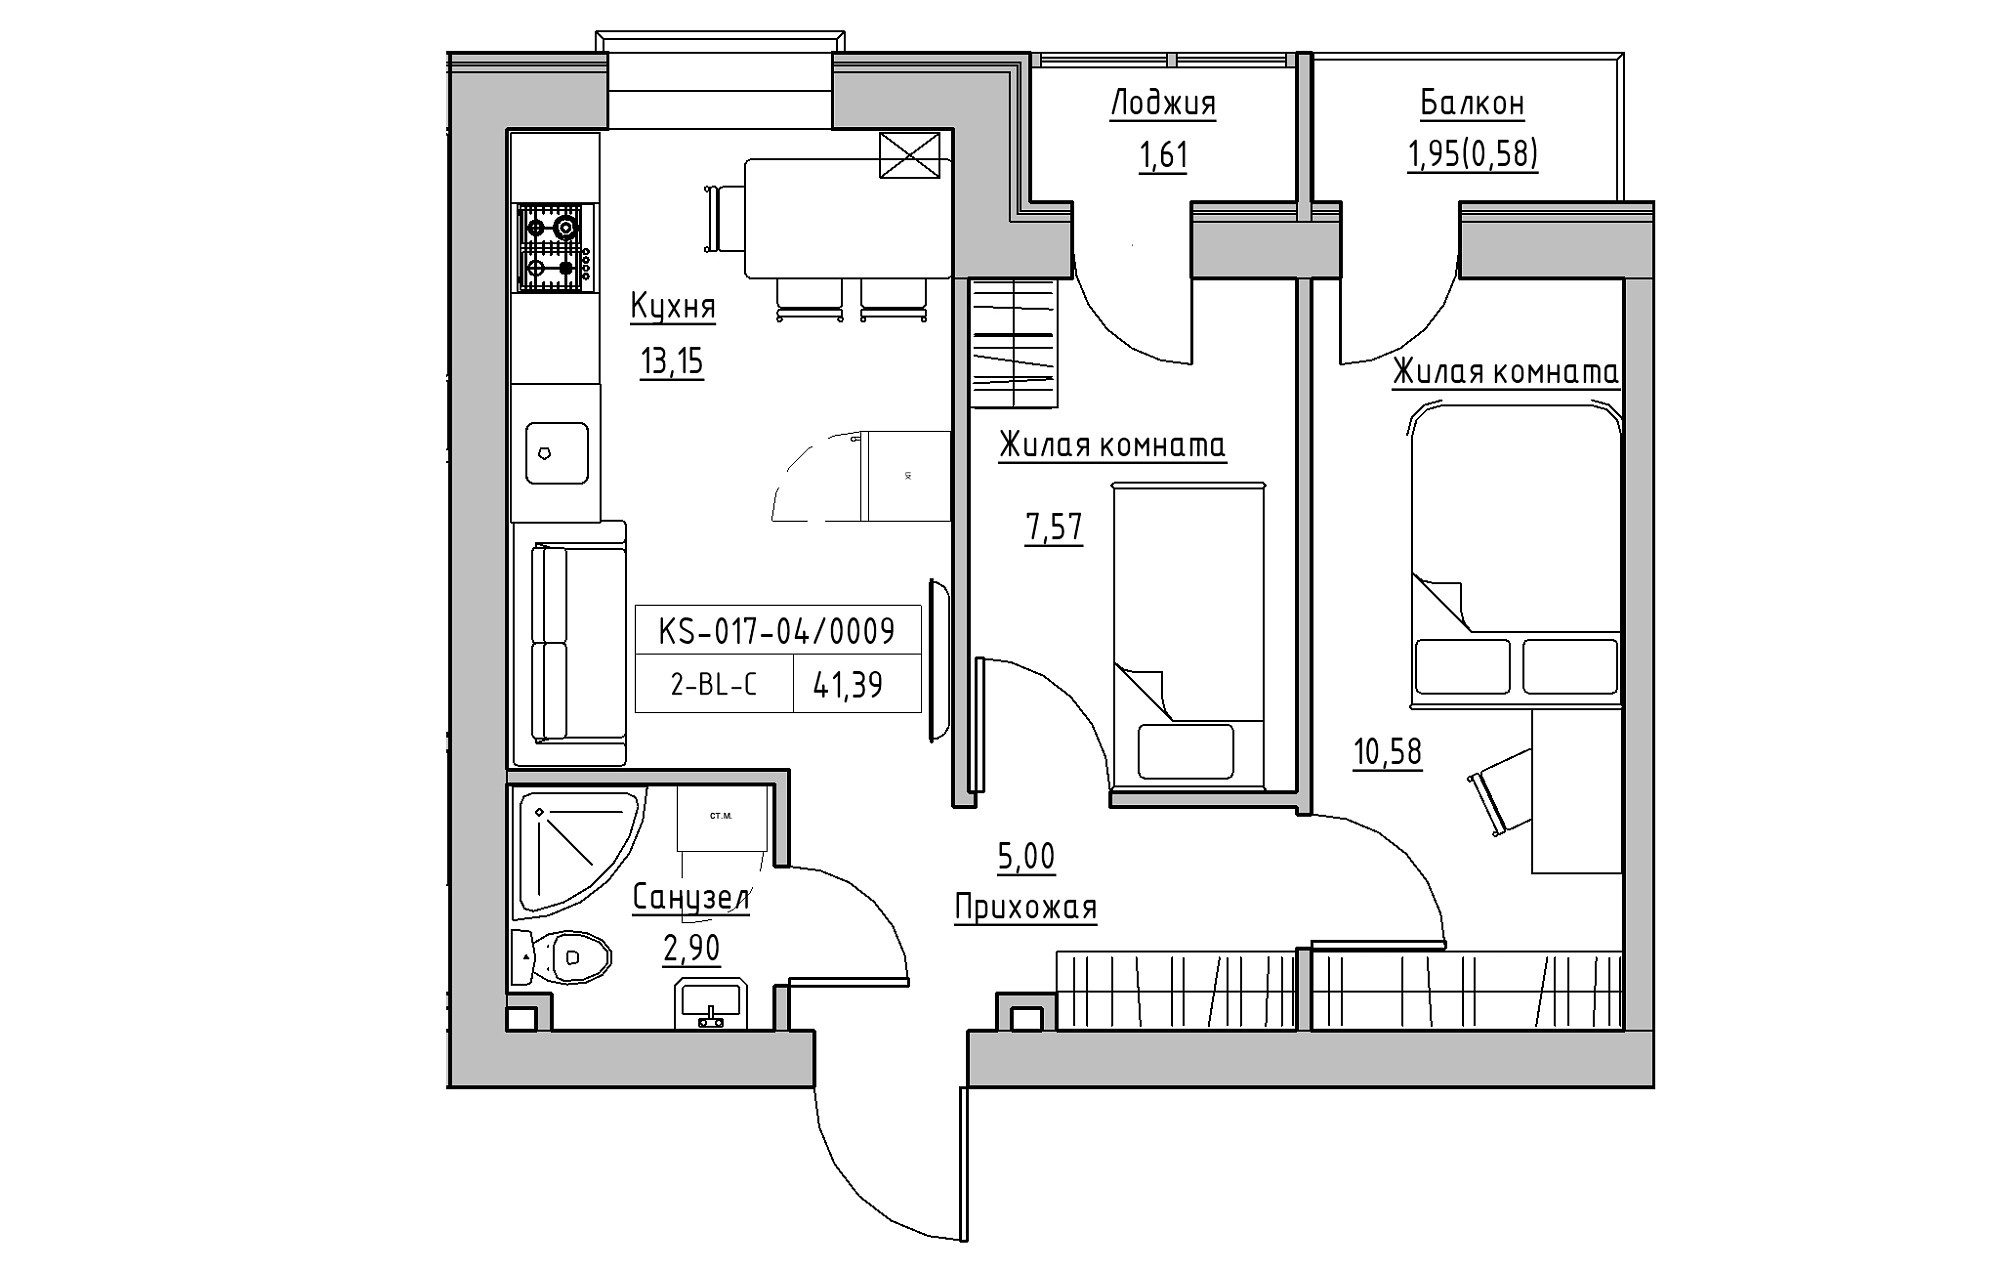 Planning 2-rm flats area 41.39m2, KS-017-04/0009.